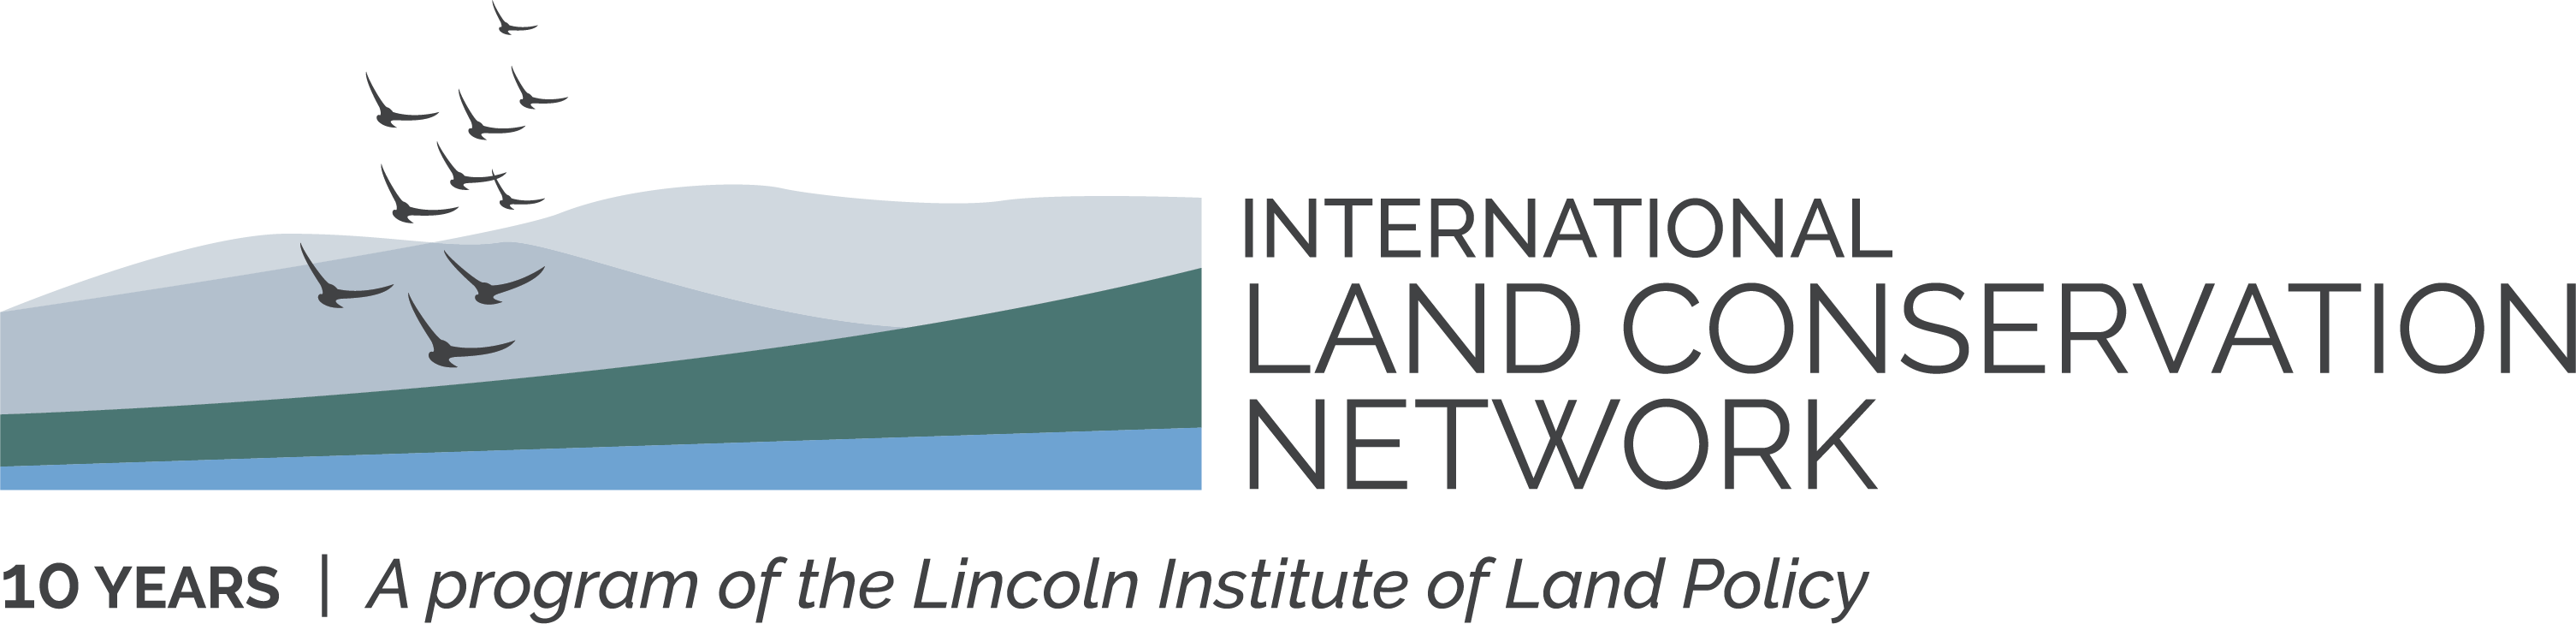 International Land Conservation Network